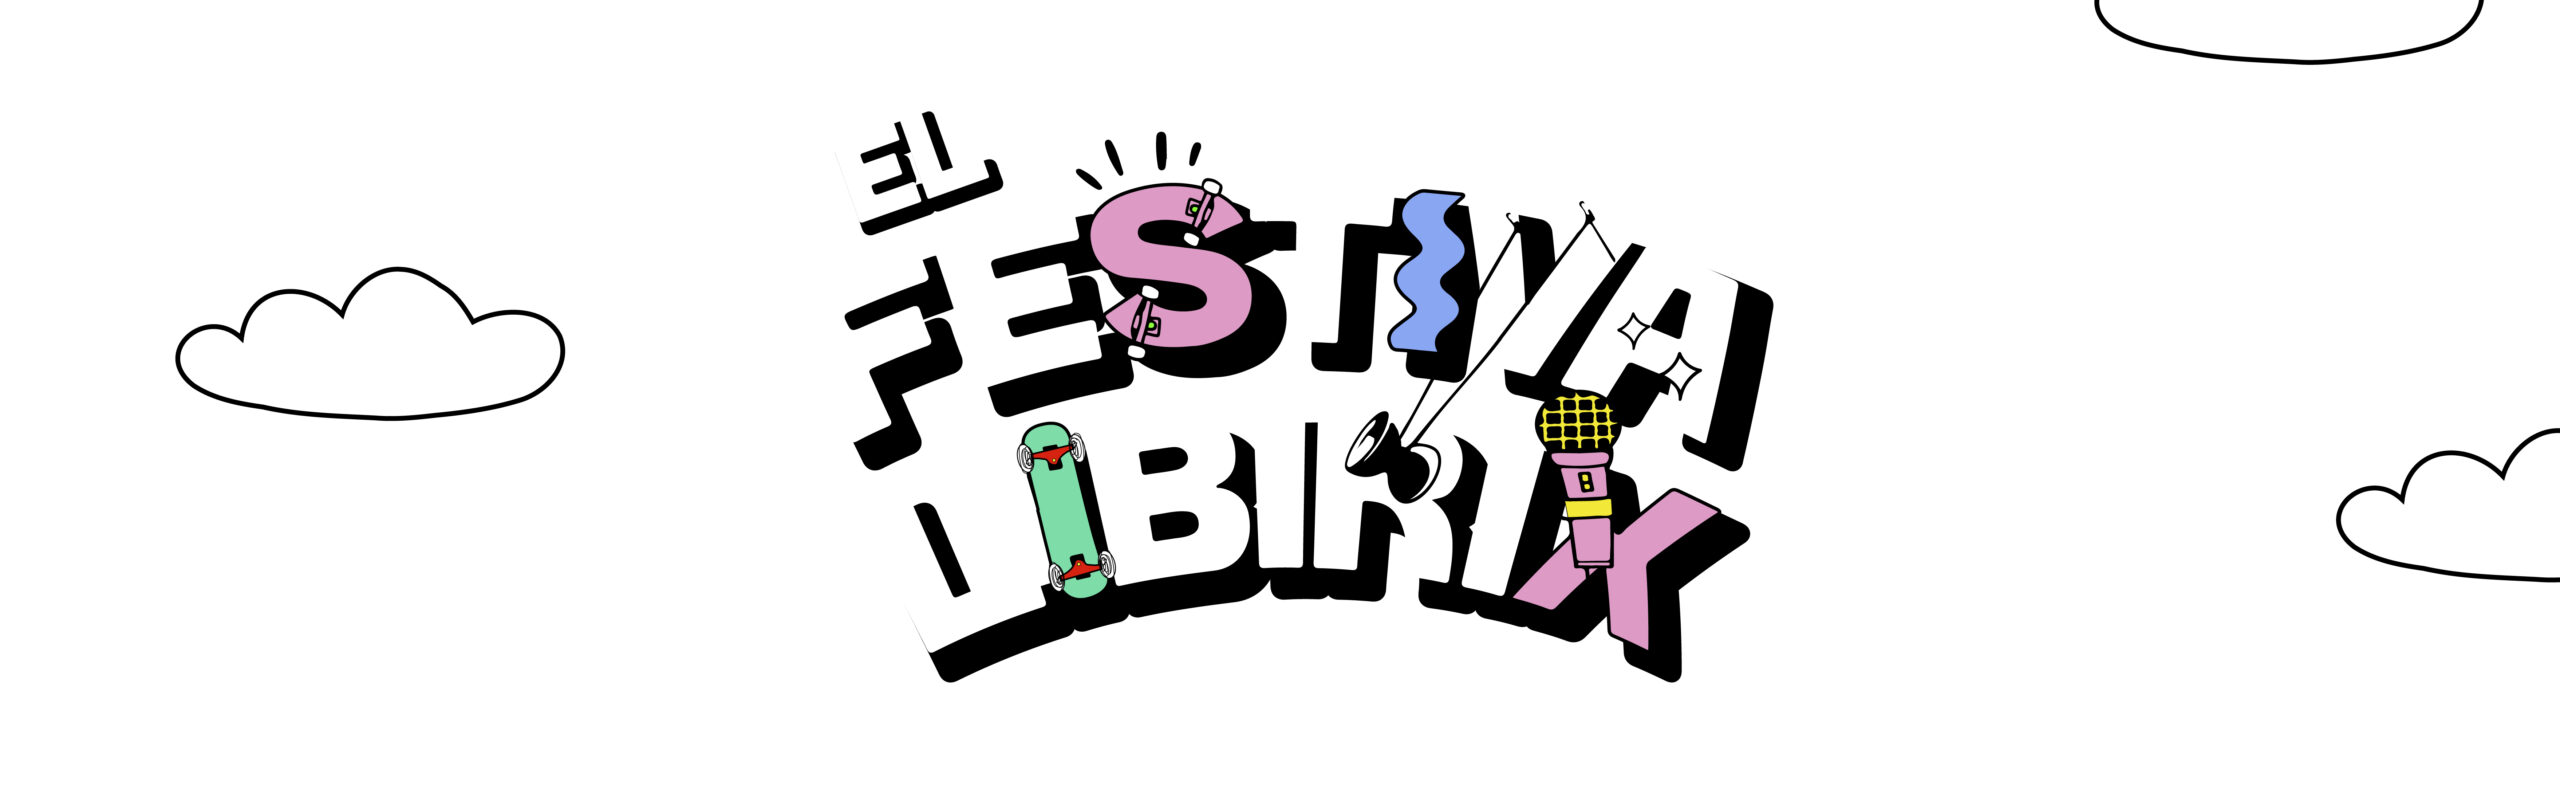 Logo festivalibirix-02